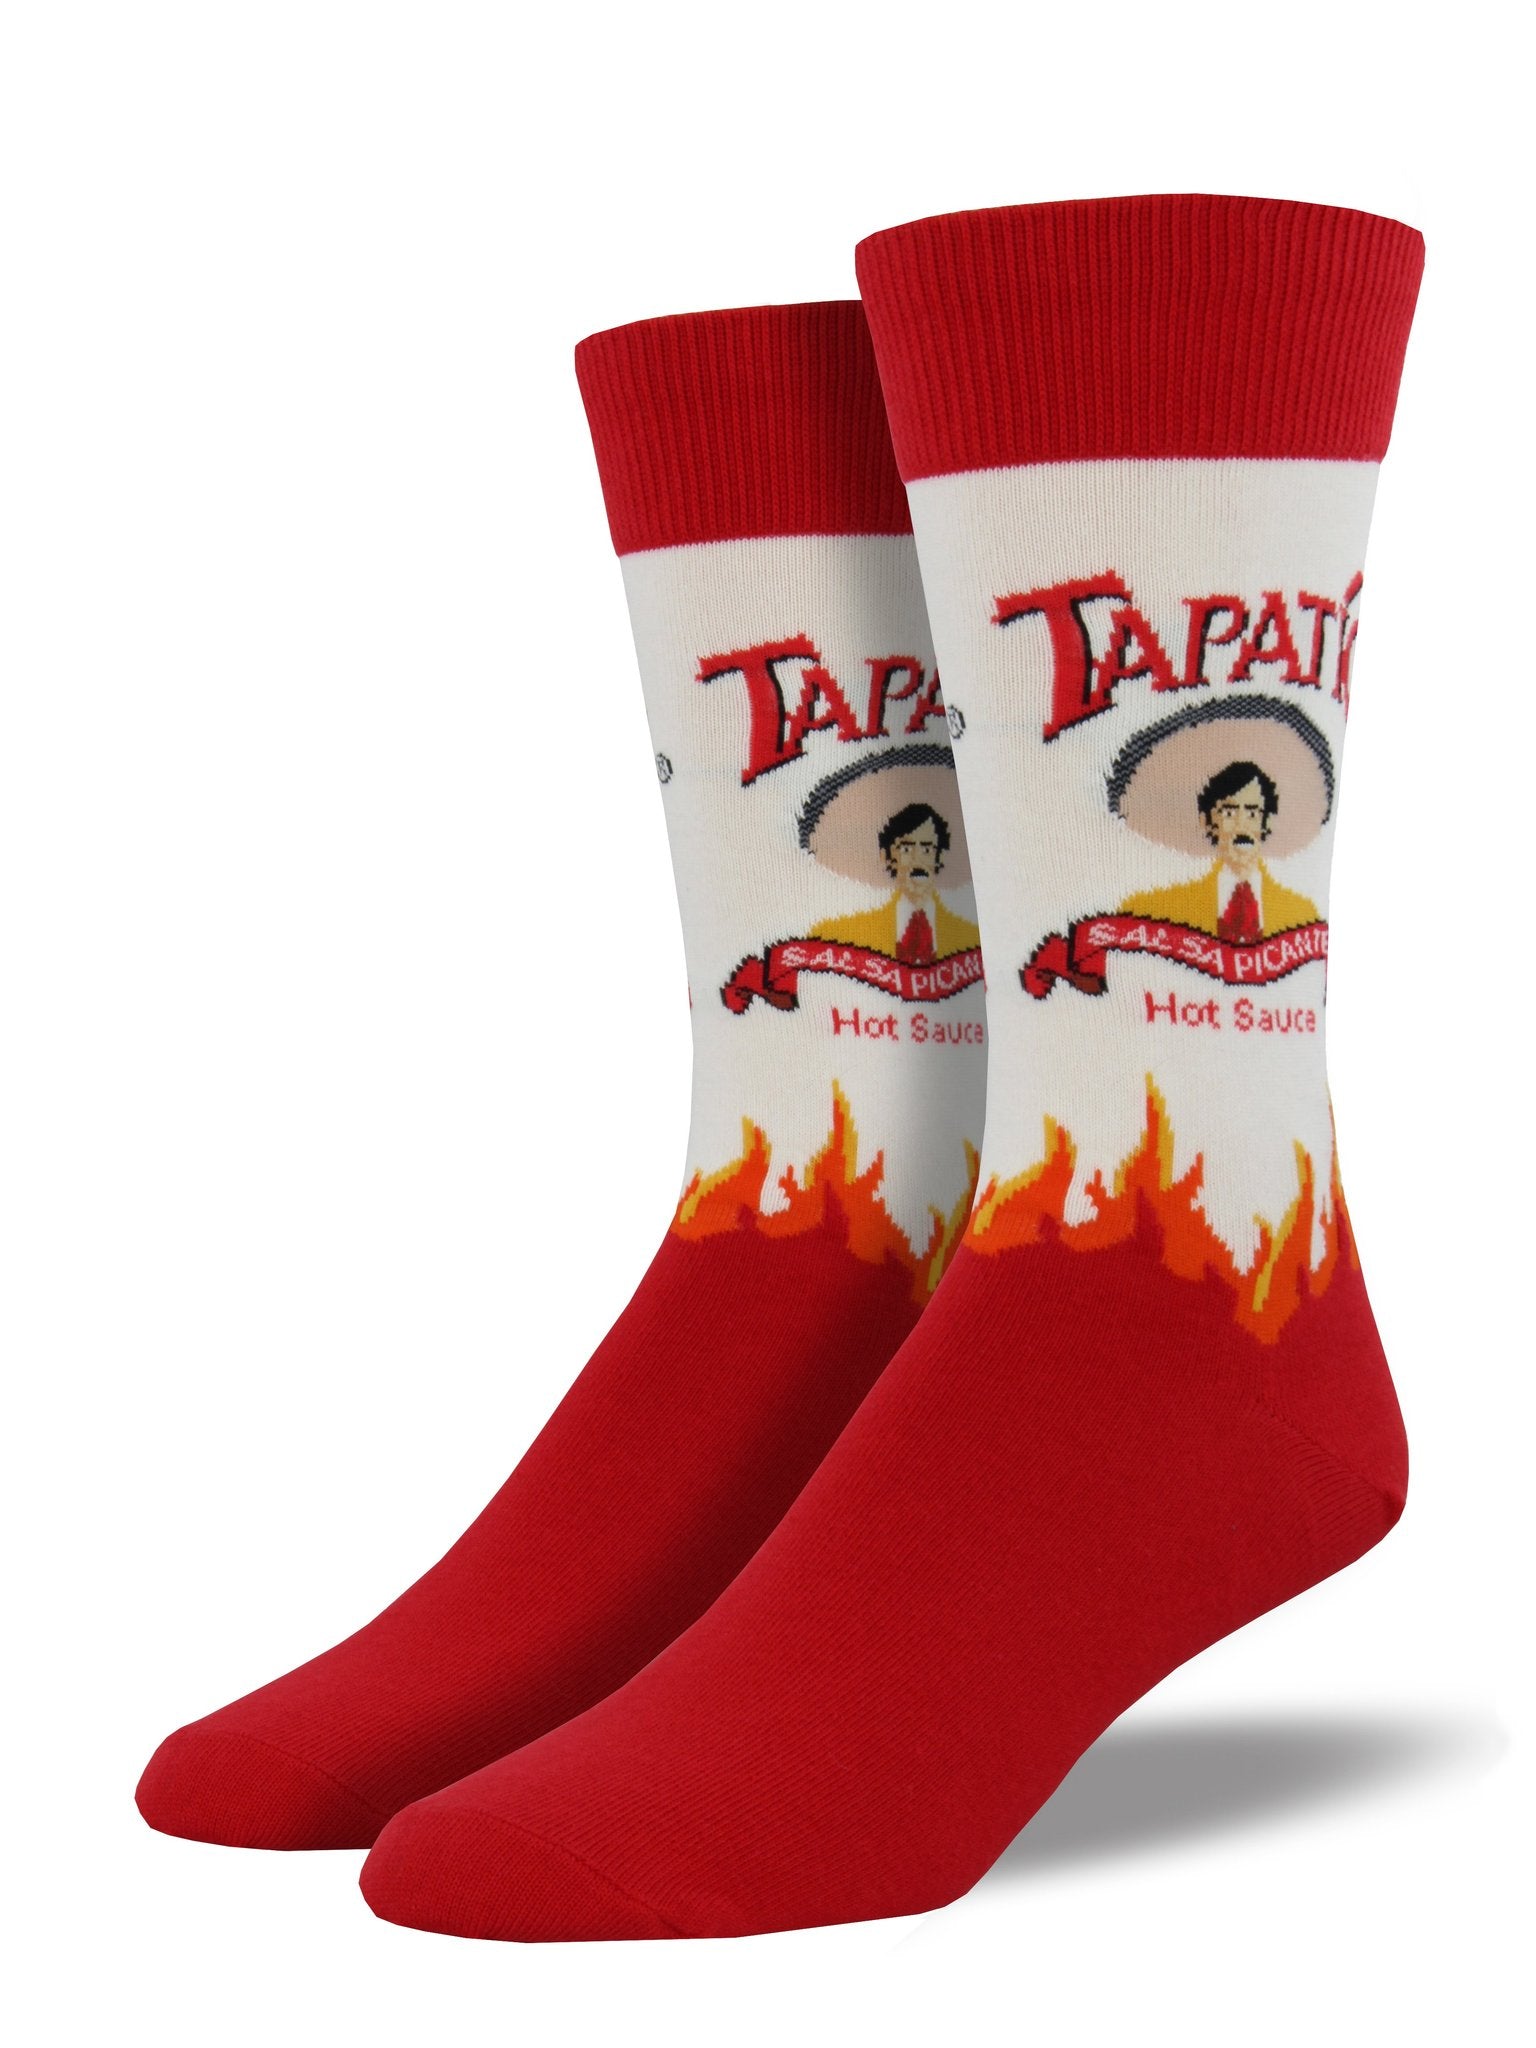 Tapatío | Men | Red/White - Socks - Socksmith